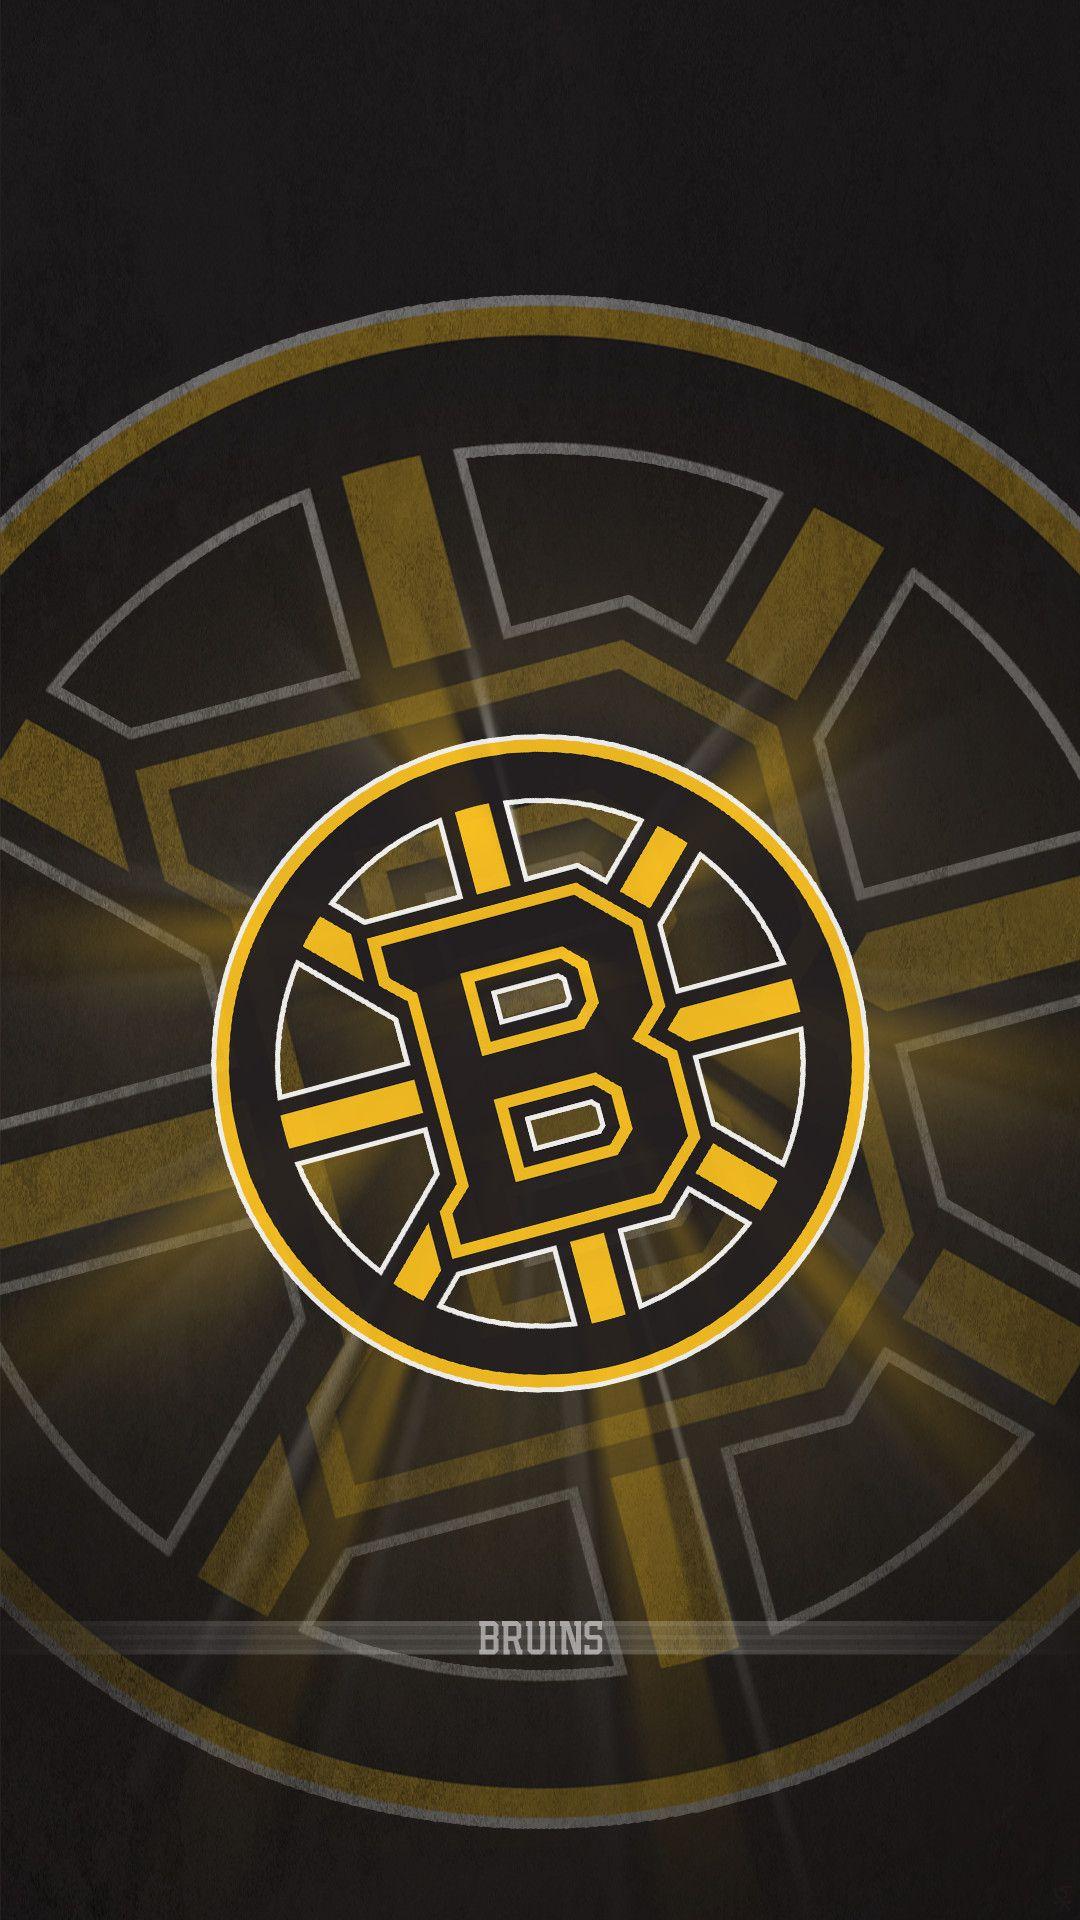 2023 Boston Bruins wallpaper – Pro Sports Backgrounds